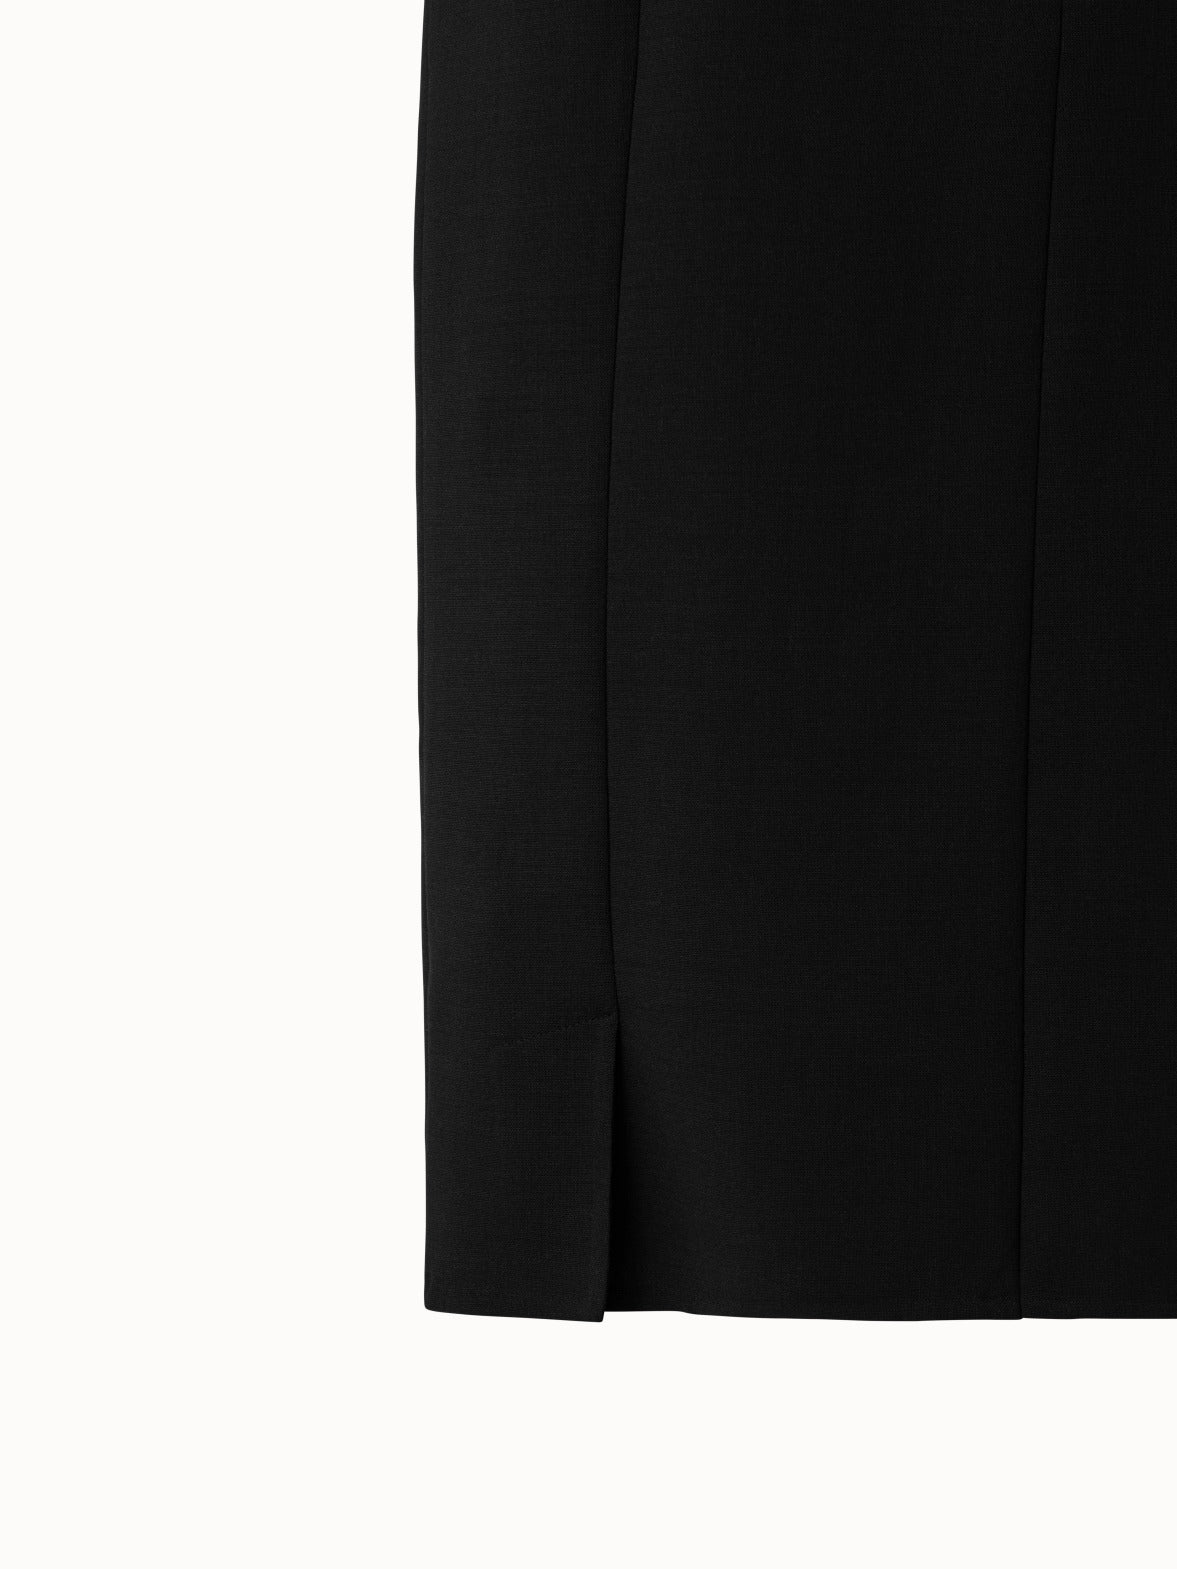 Buy Secrets By ZeroKaata Seamless Shaping Dress - Black at Rs.1496